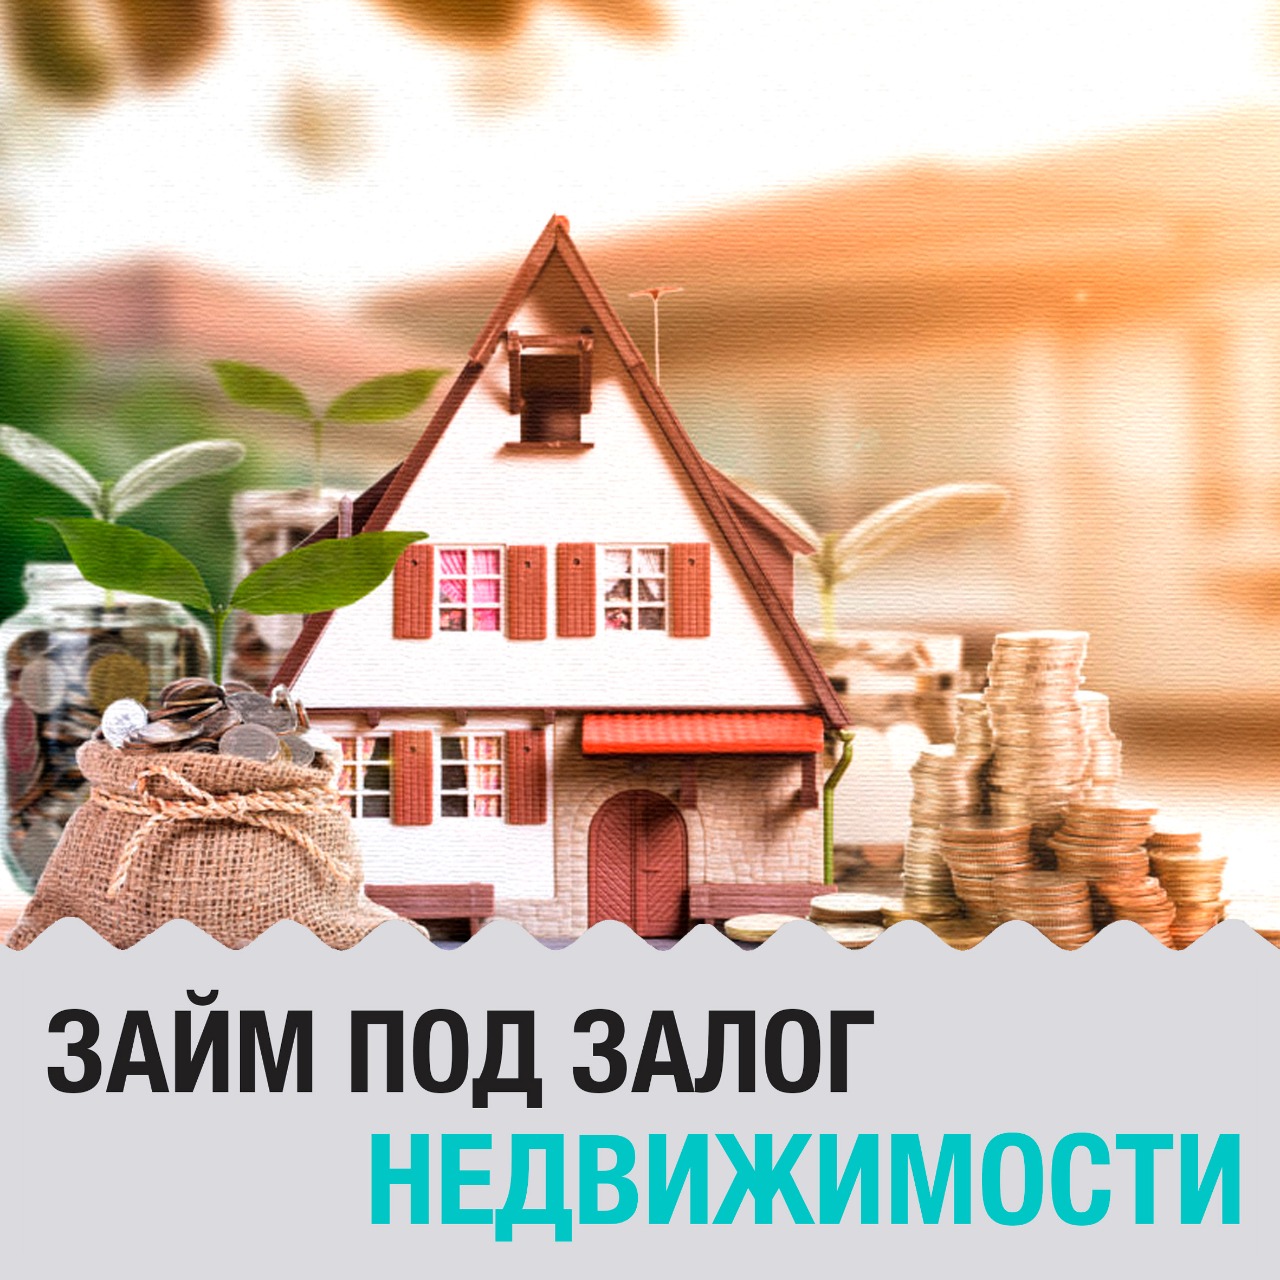 Займ под залог недвижимости от частного инвестора в городе Санкт-Петербург, фото 1, телефон продавца: +7 (812) 602-39-33